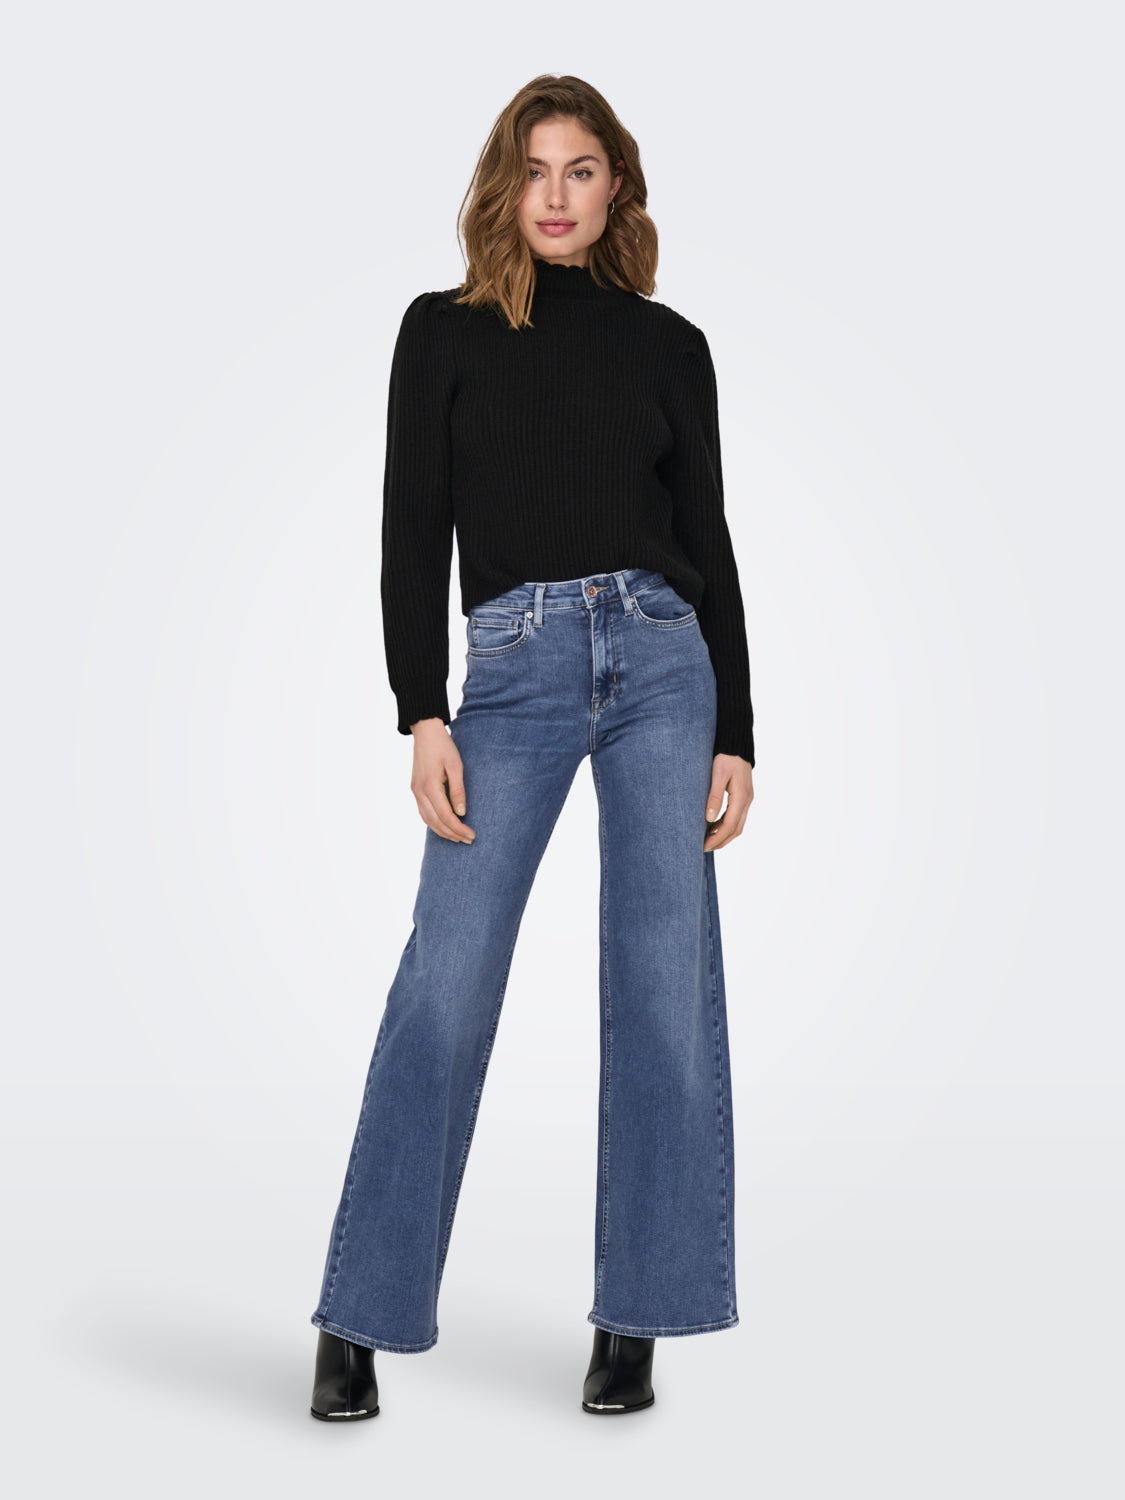 ONLMADISON Jeans - Medium Blue Denim